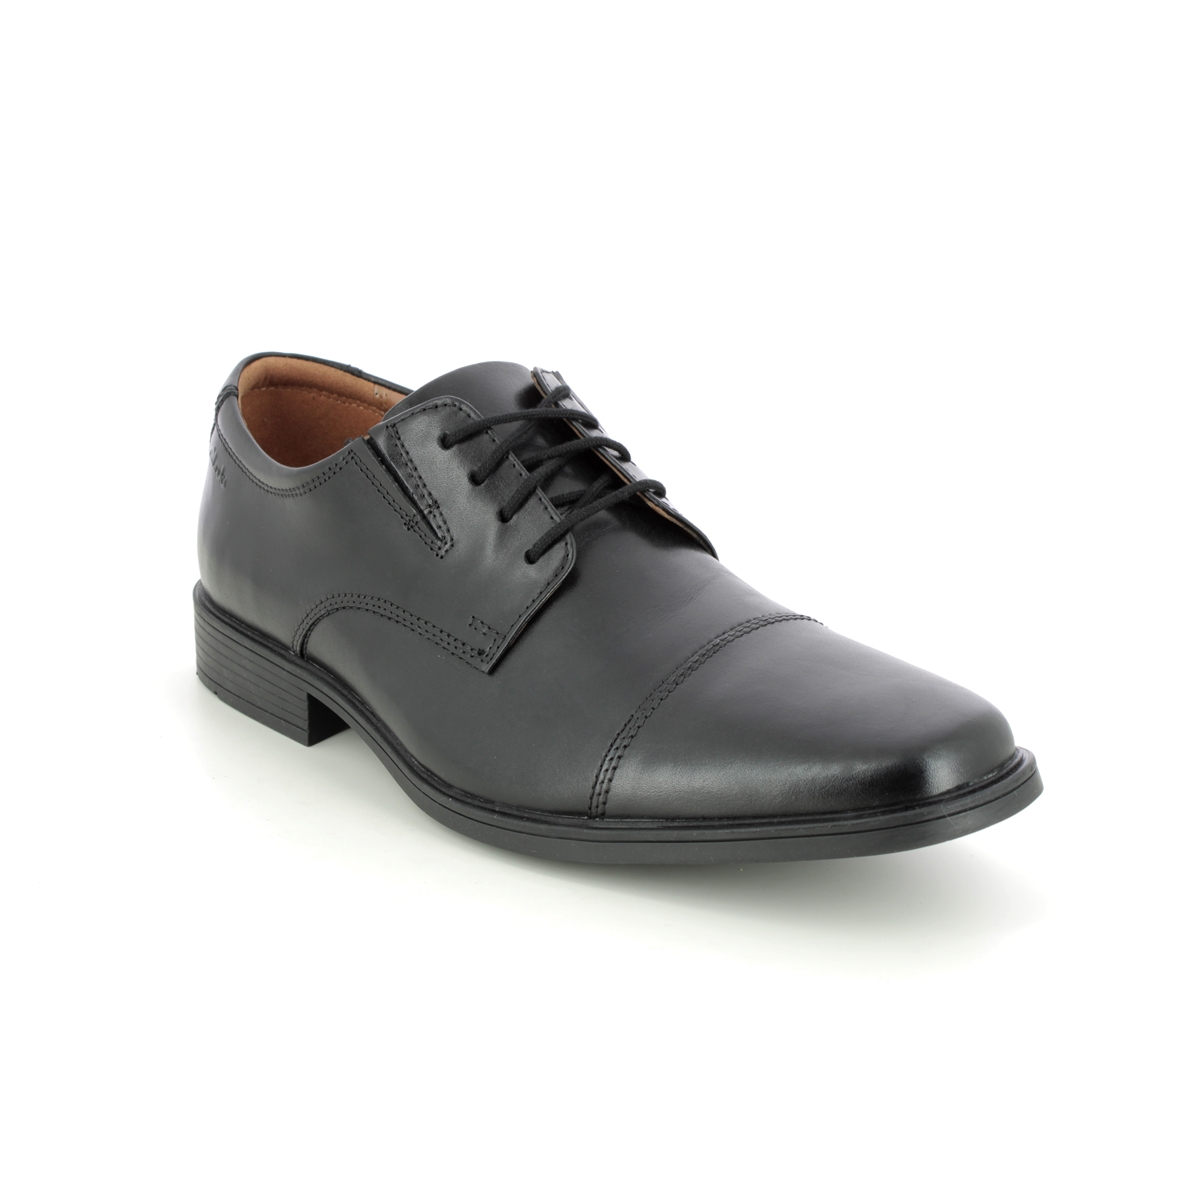 Clarks Tilden Cap Black Leather Mens Formal Shoes 103097G In Size 10 In Plain Black Leather G Width Fitting